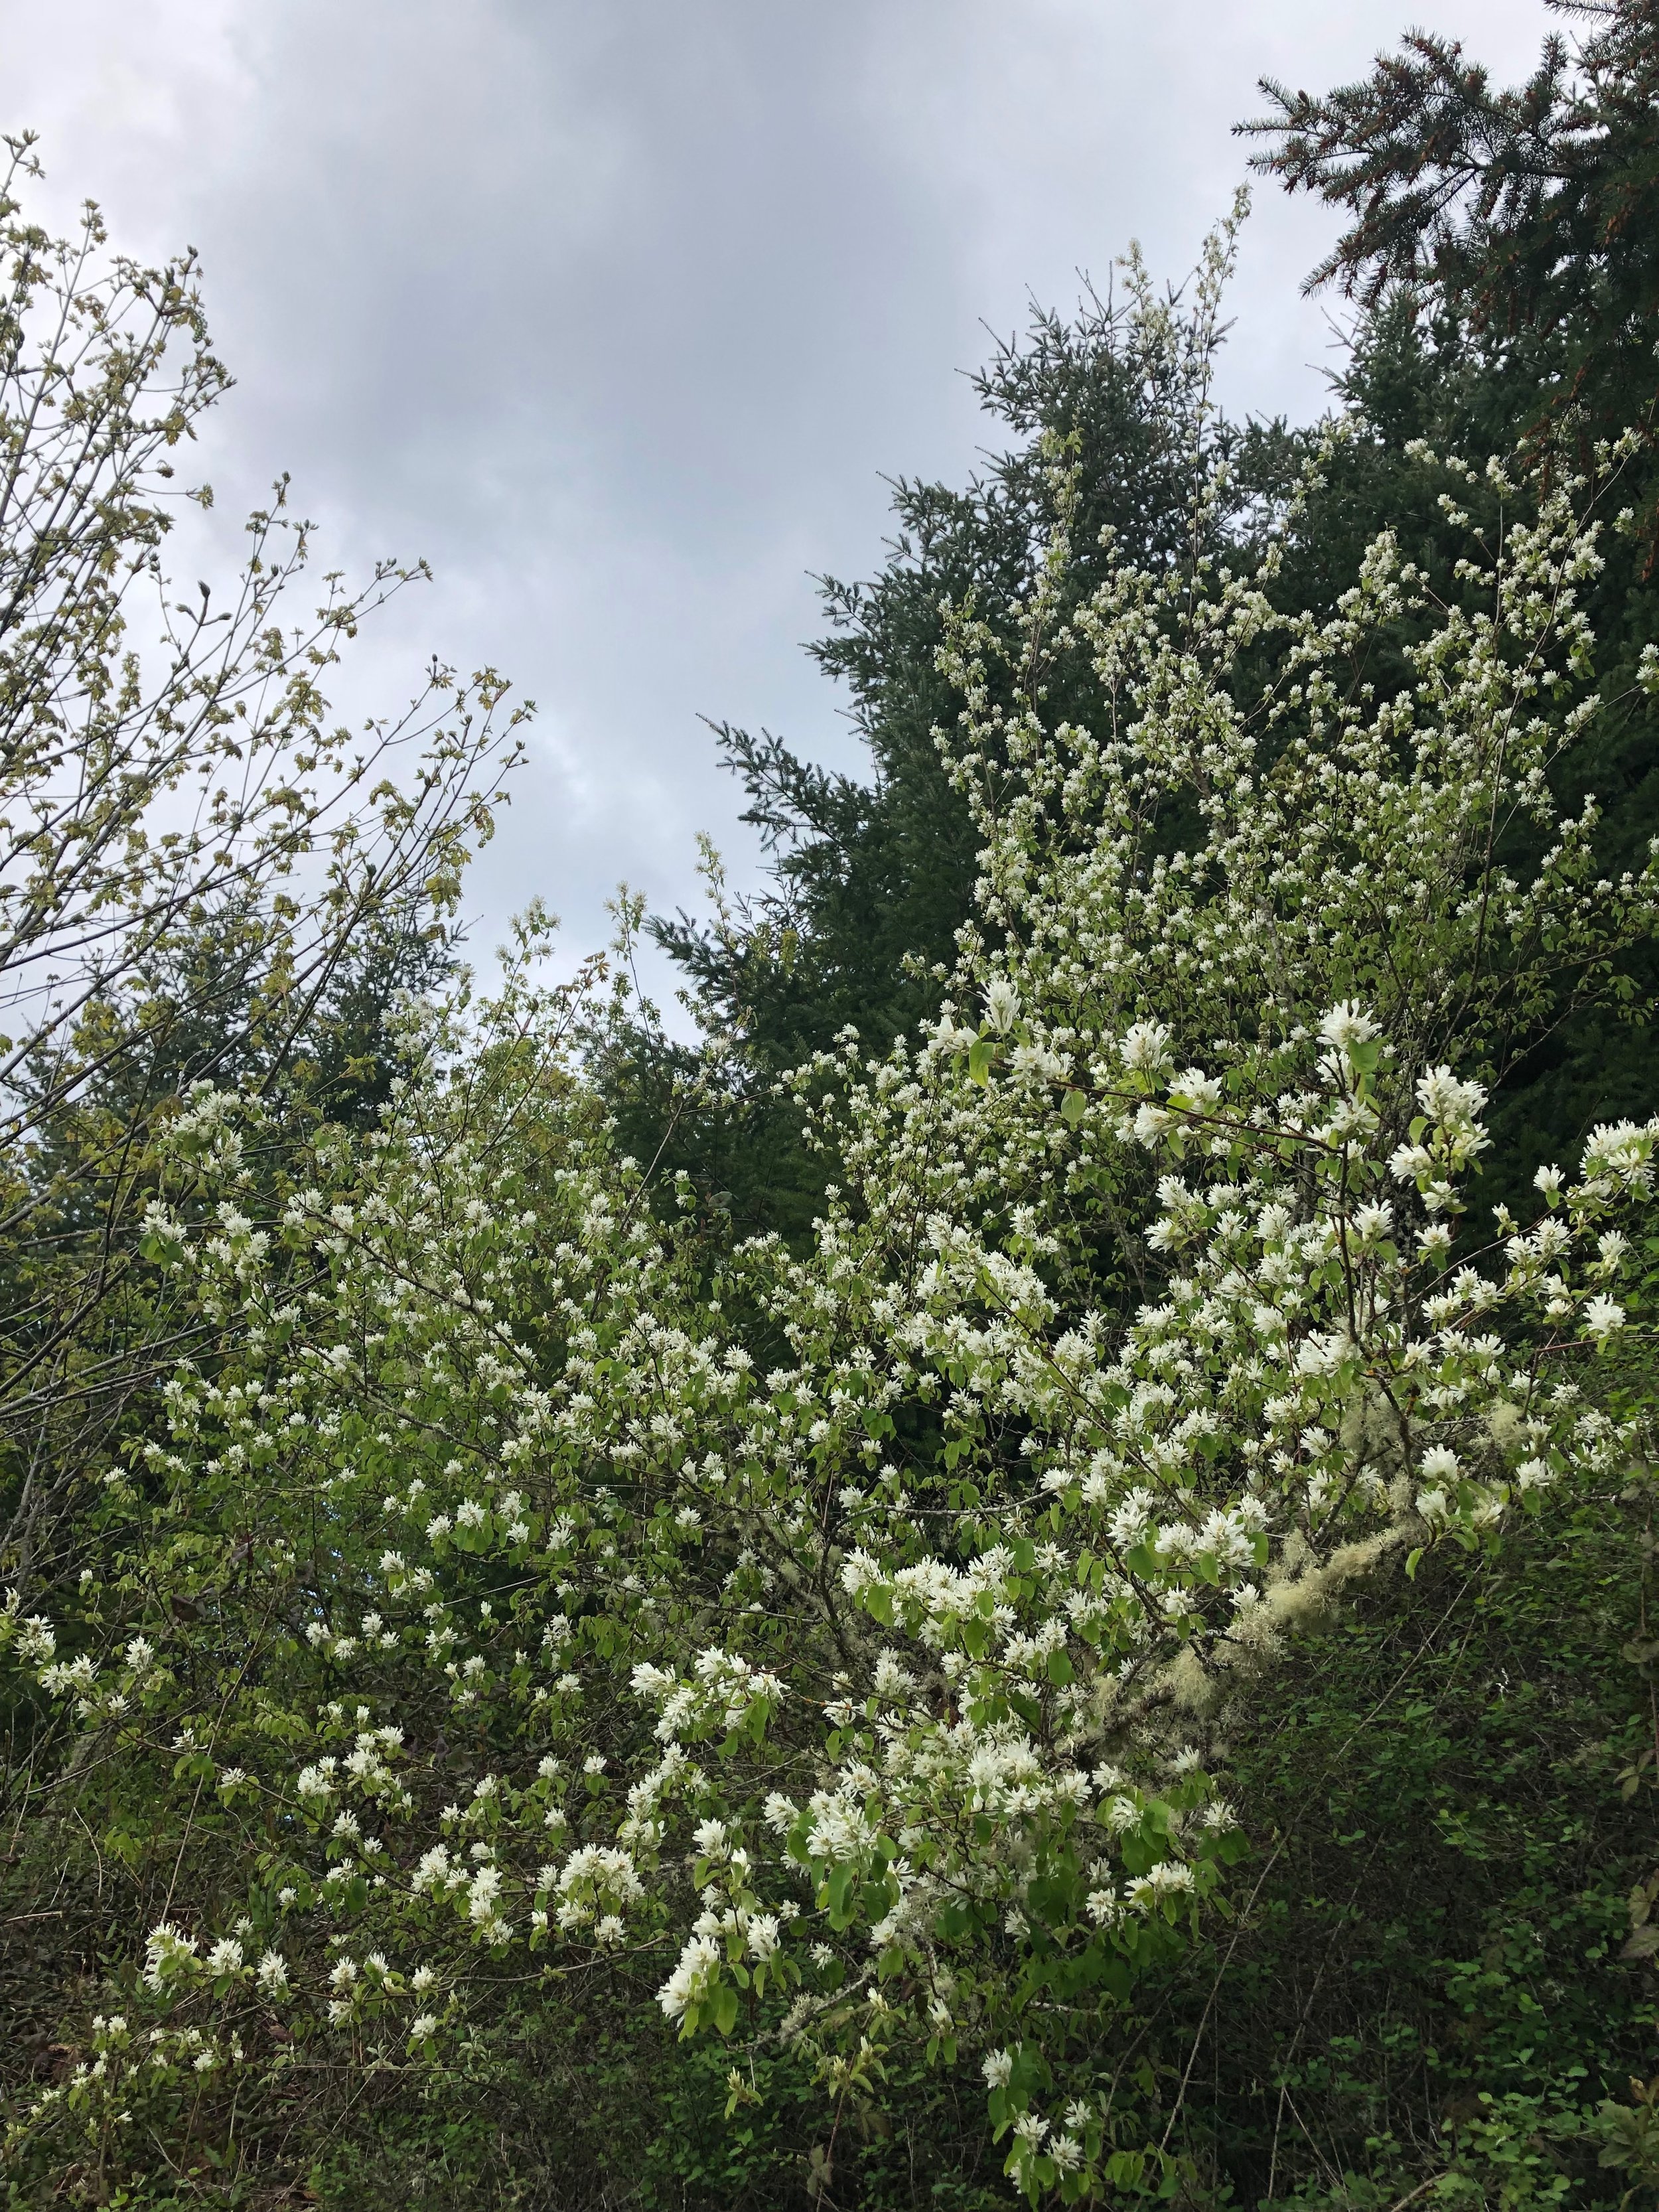 Native serviceberries in bloom